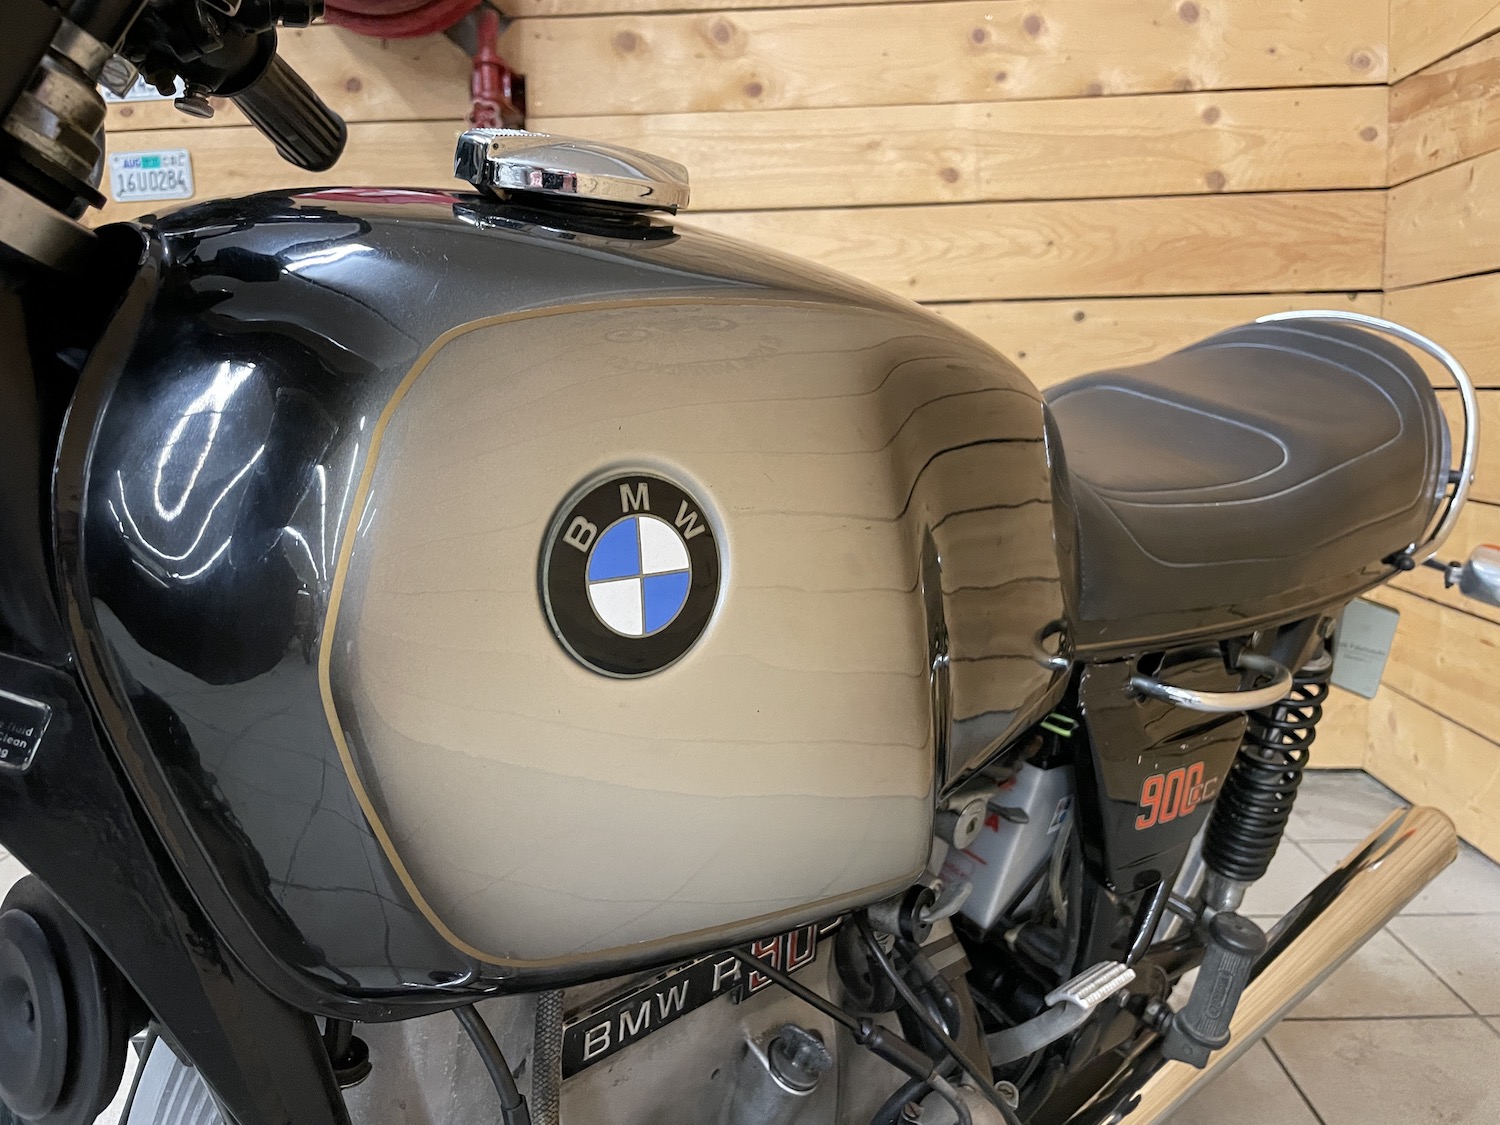 BMW_R90s_74_cezanne_classic_motorcycle_5_111-127.jpg